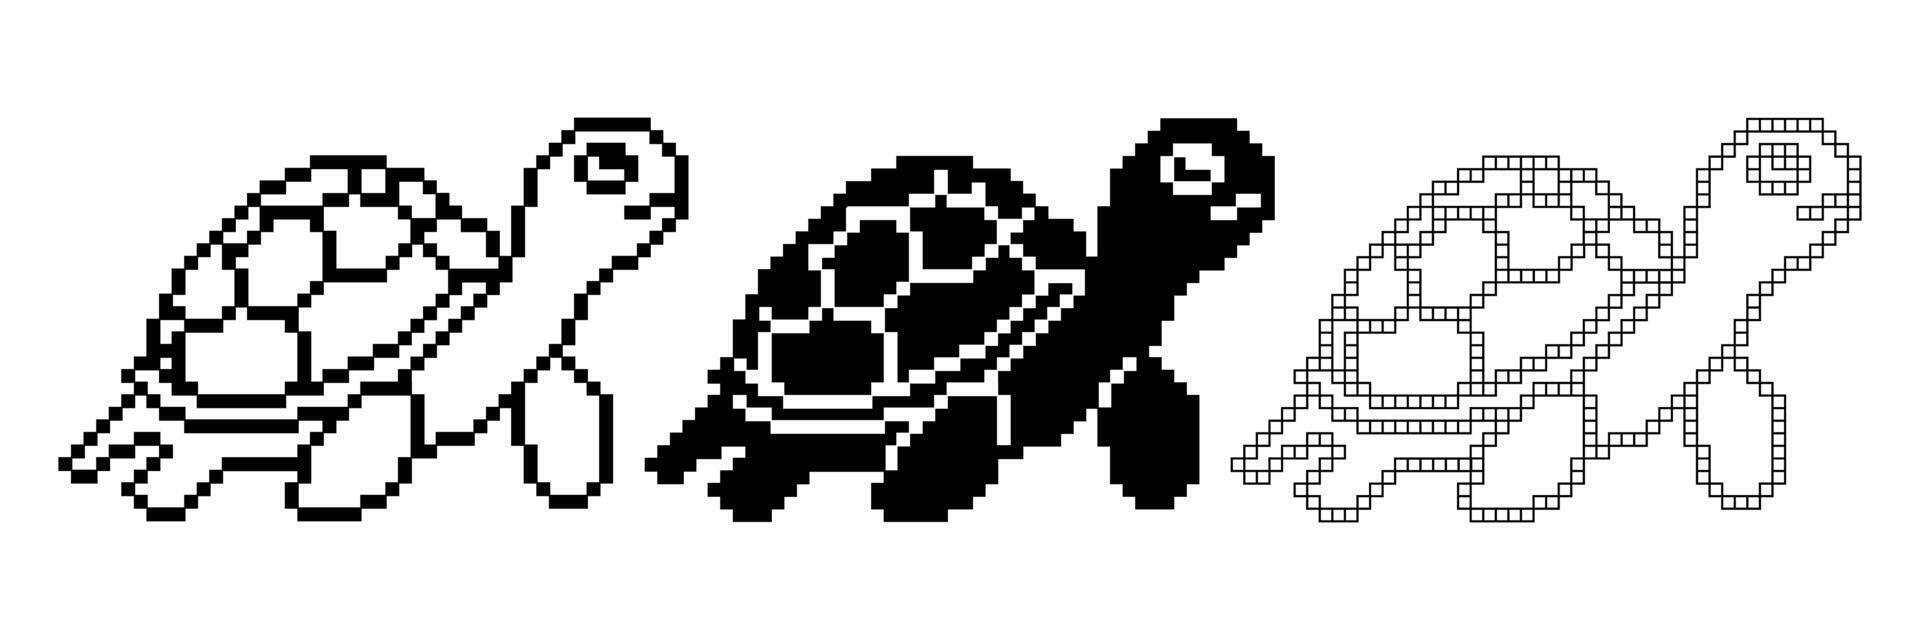 lado Visão pixel arte tartaruga ícone conjunto isolado em branco fundo vetor